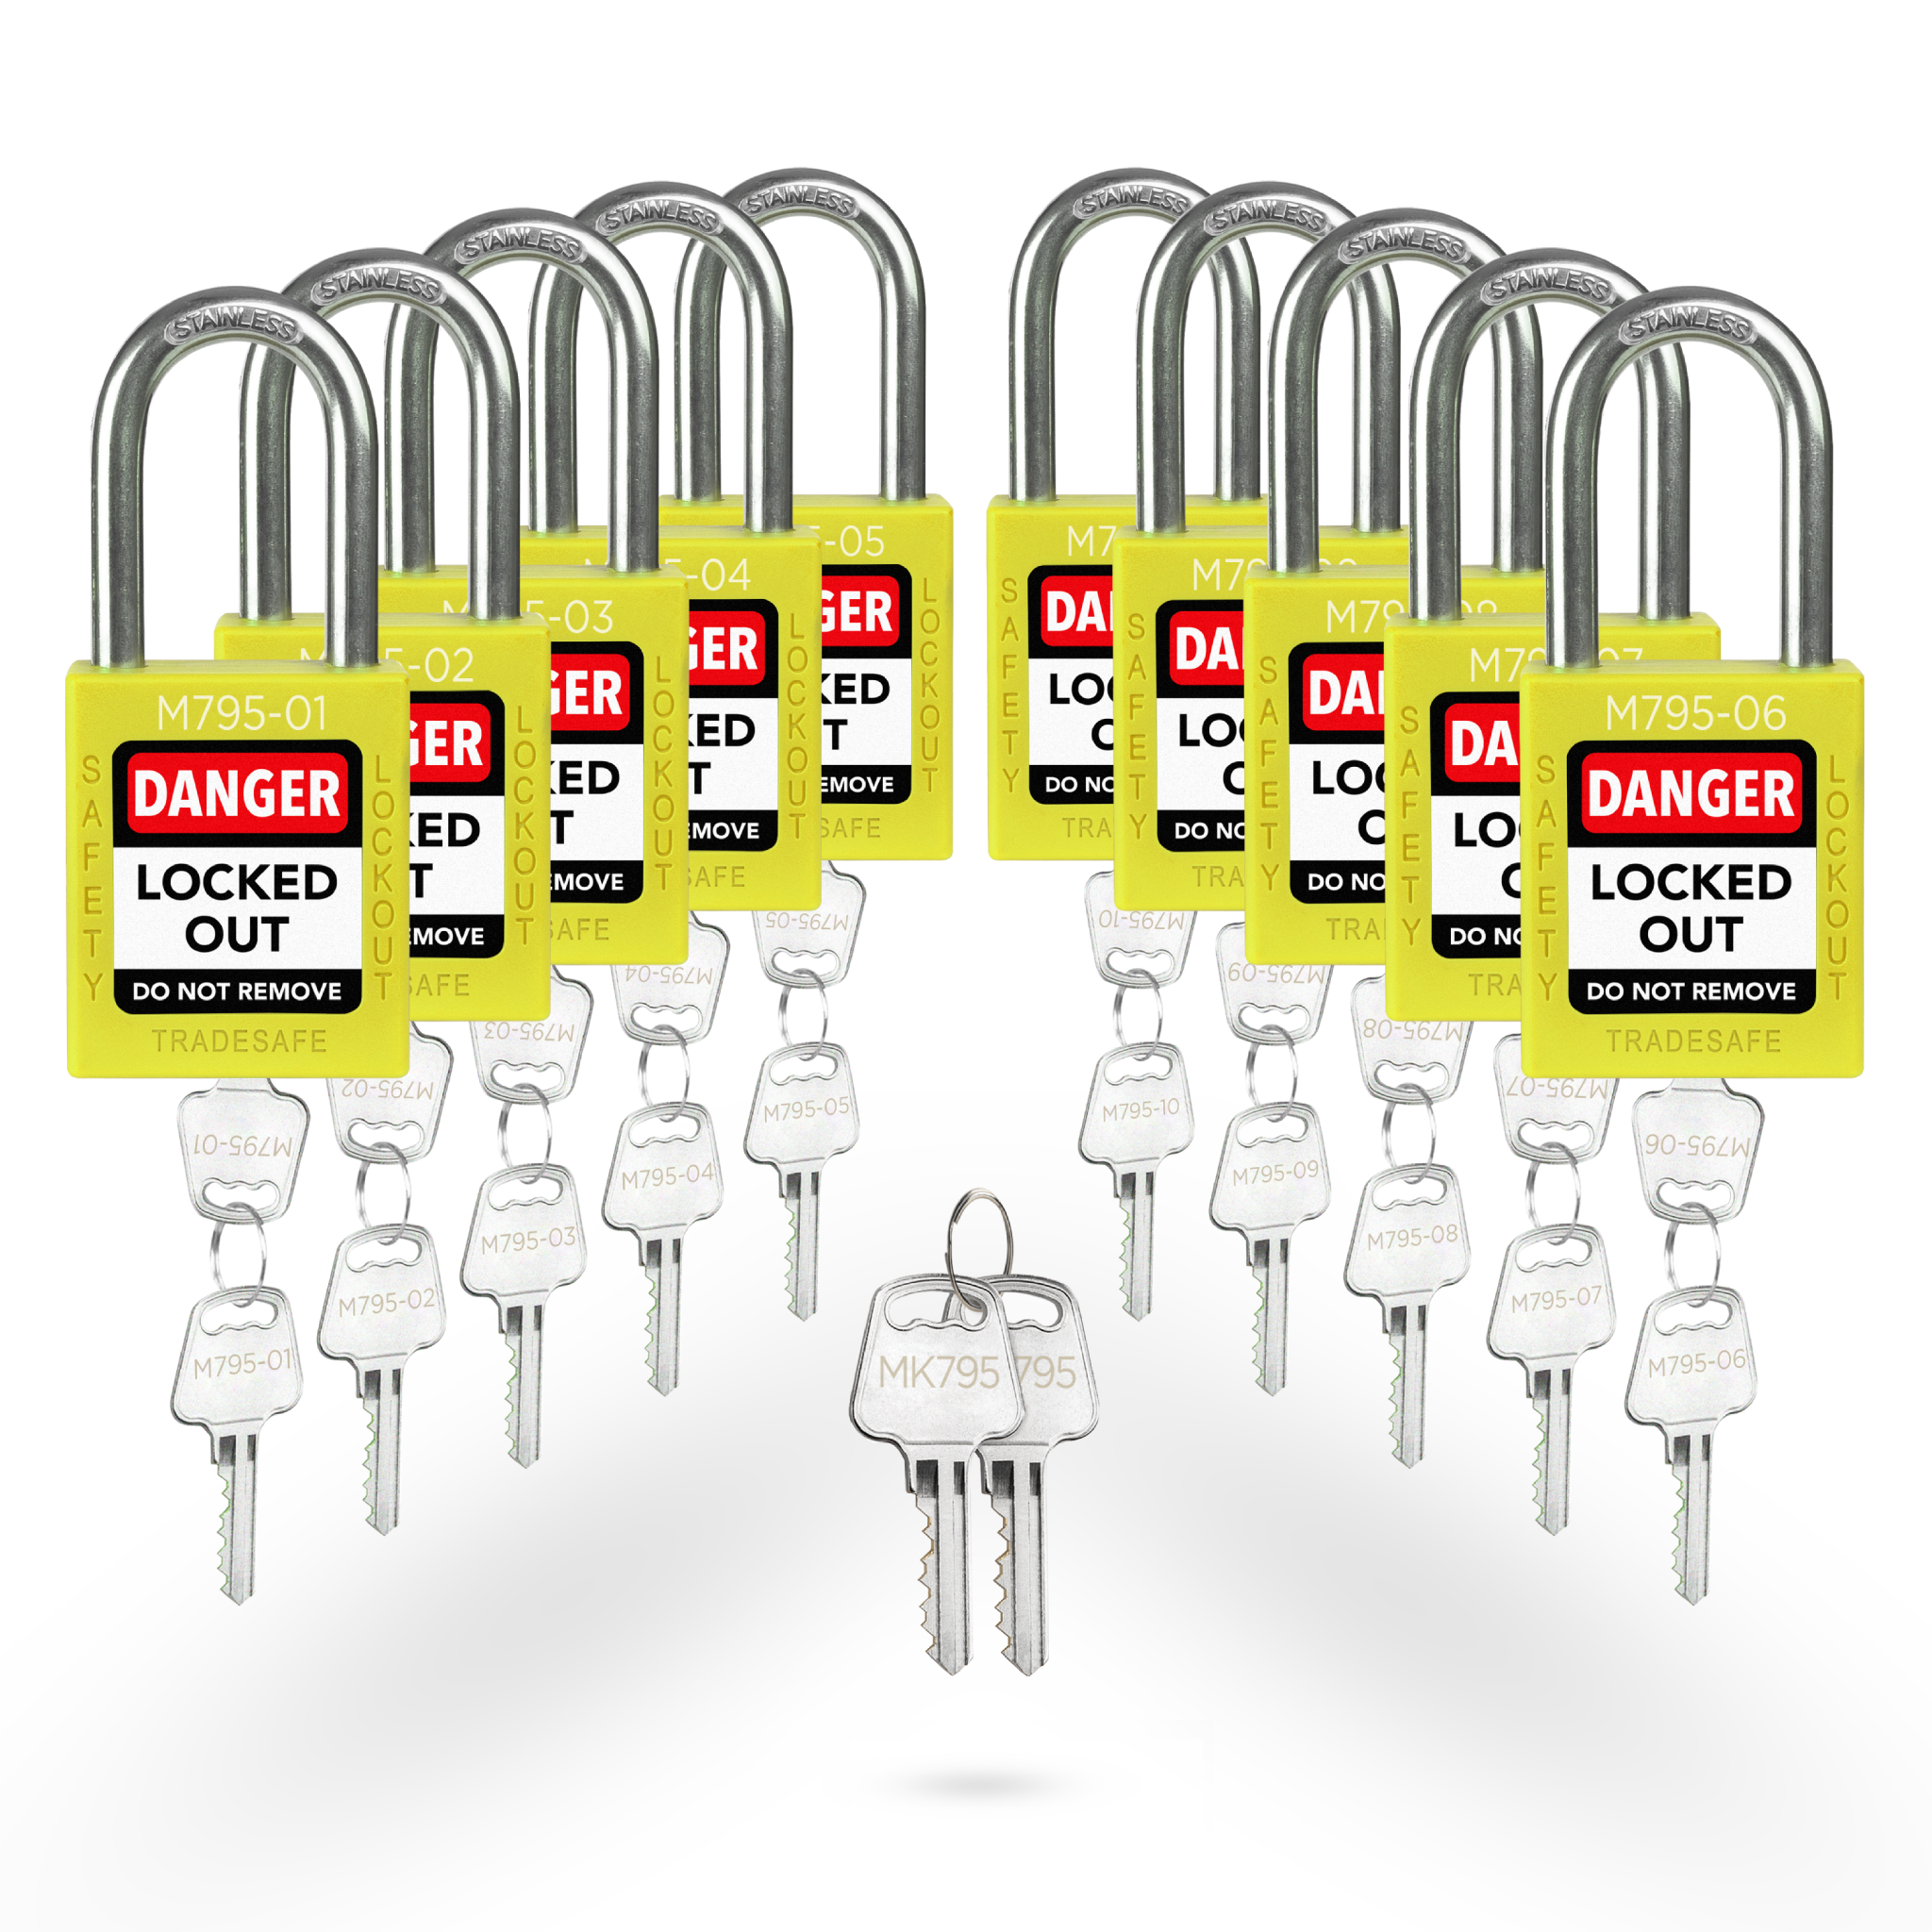 TRADESAFE Lockout Tagout Locks Set with Master Keys - 10 Yellow Loto Locks Keyed Different, 2 Keys per Lock, Lockout Locks for Electrical Lockout